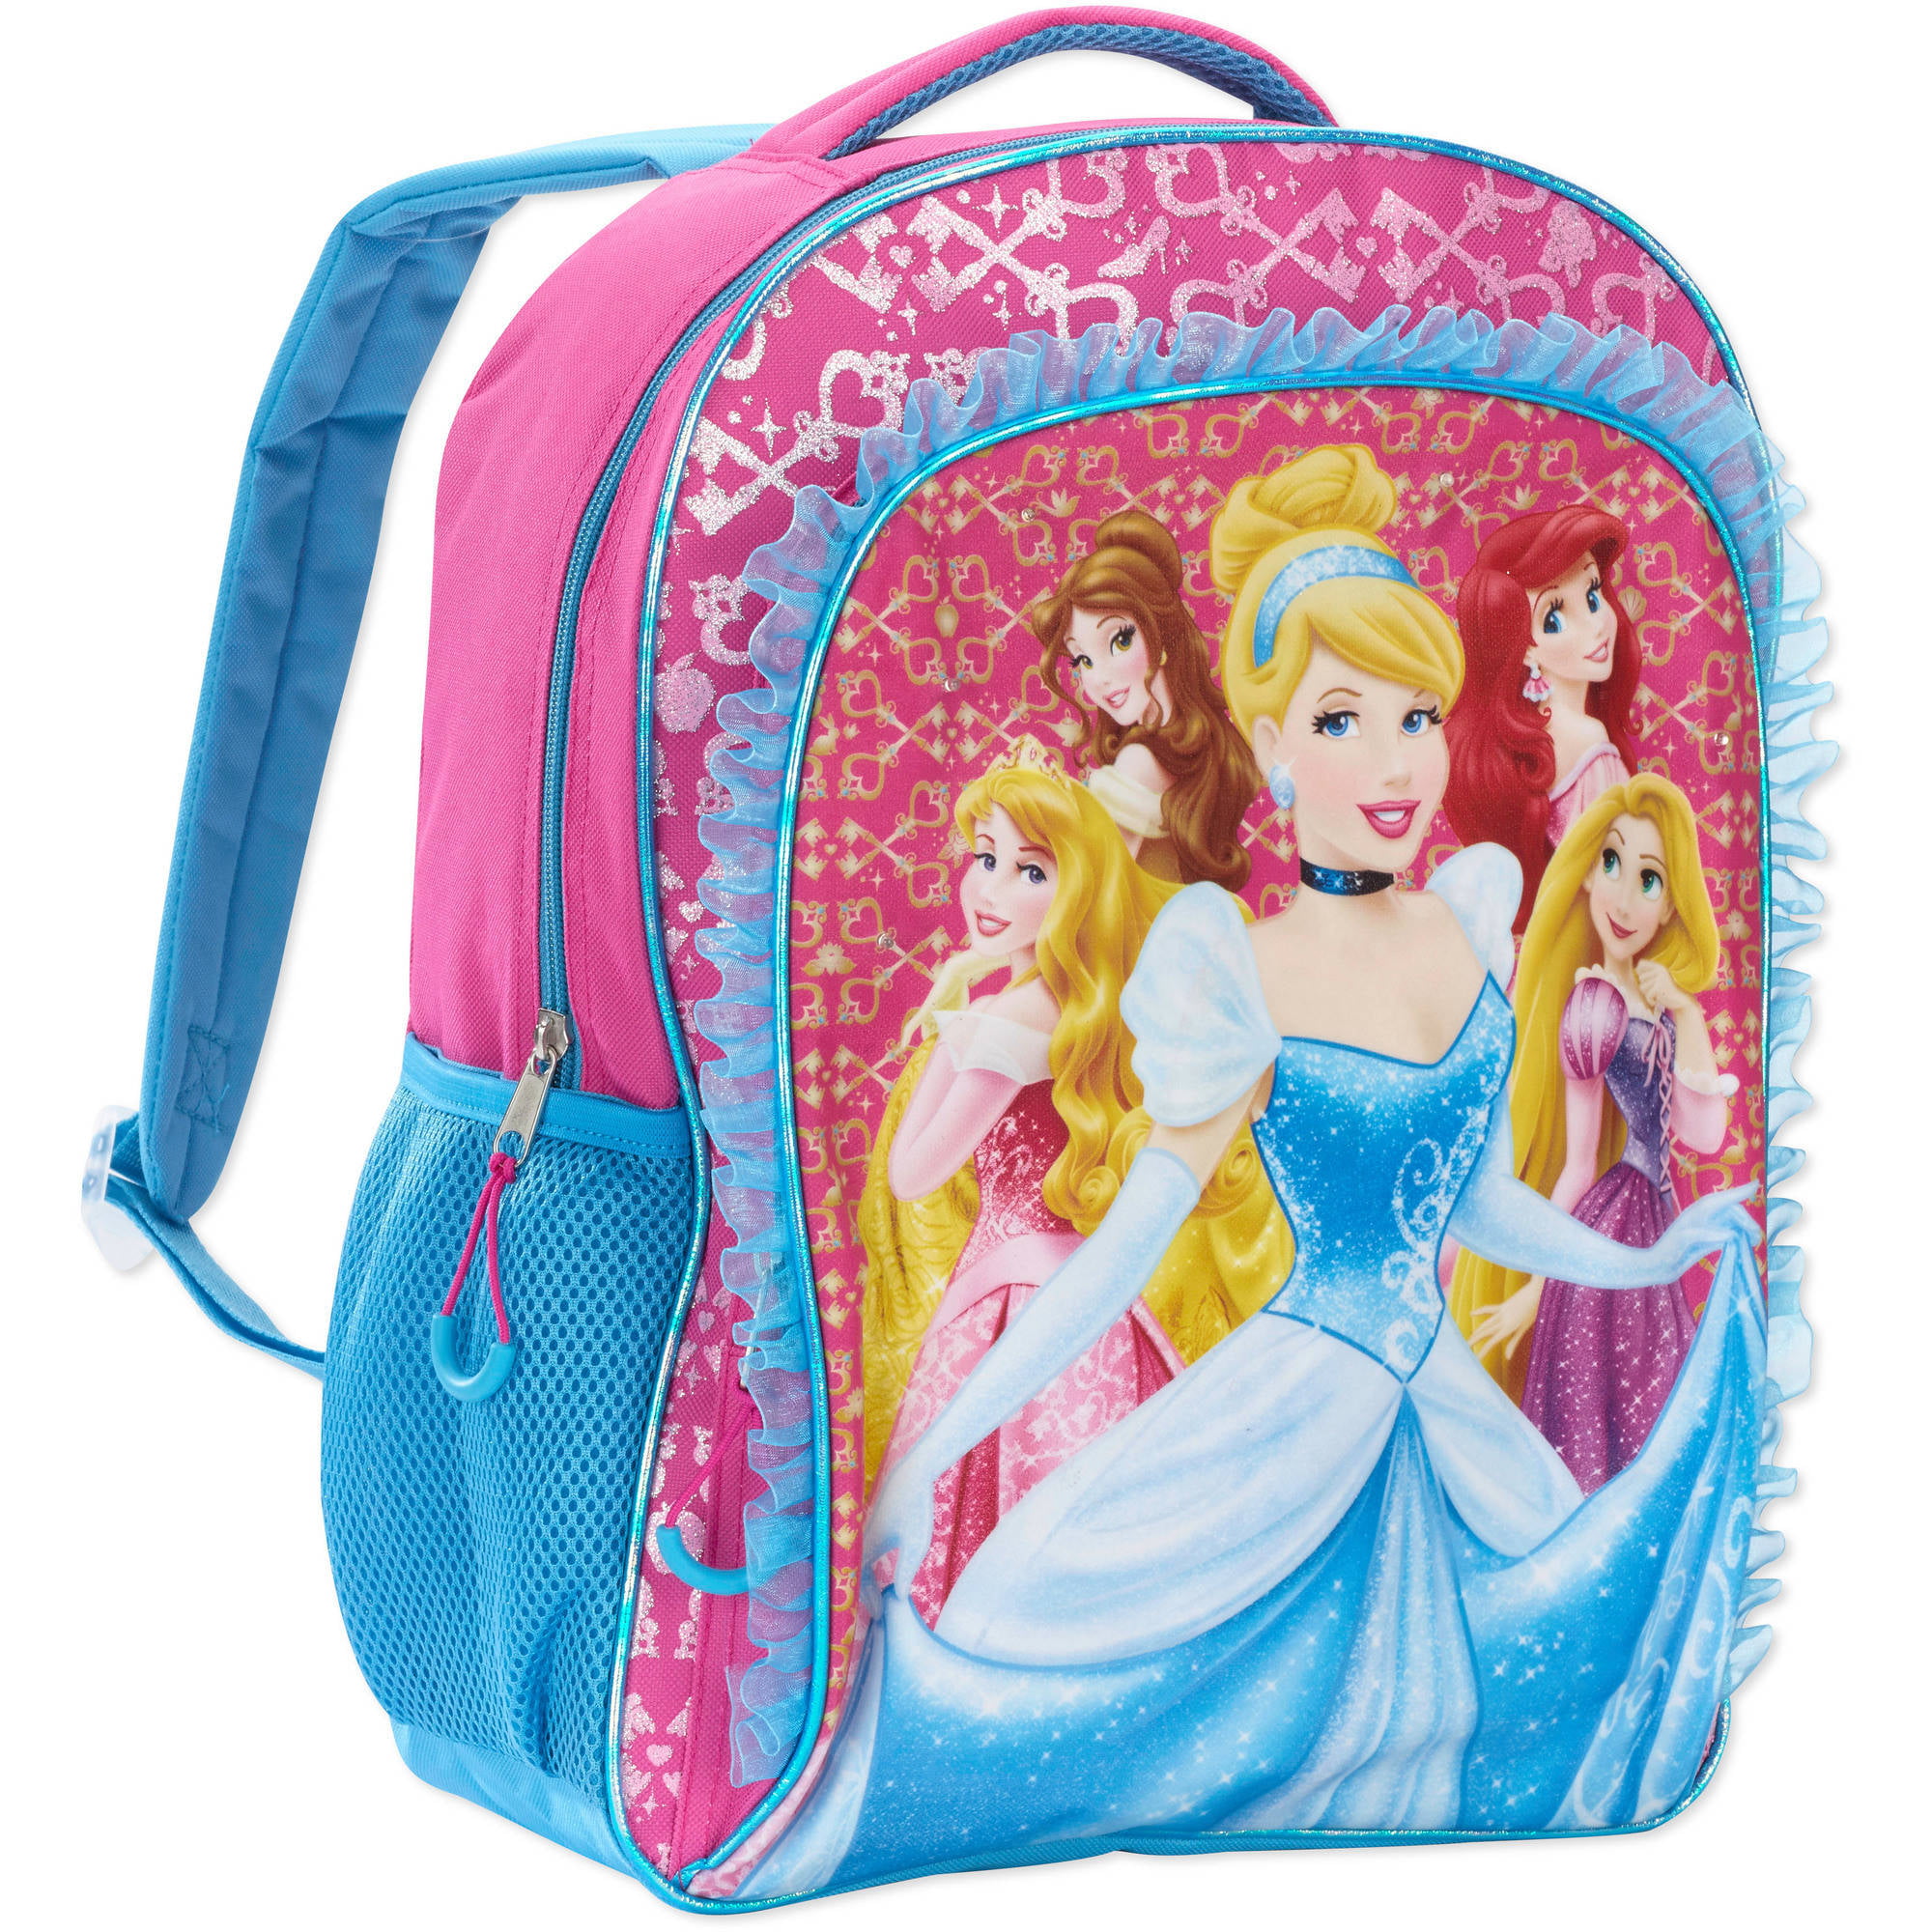 3D Brand New Disney Princess High Quality Backpack Bag Kids Toddlers Girls 